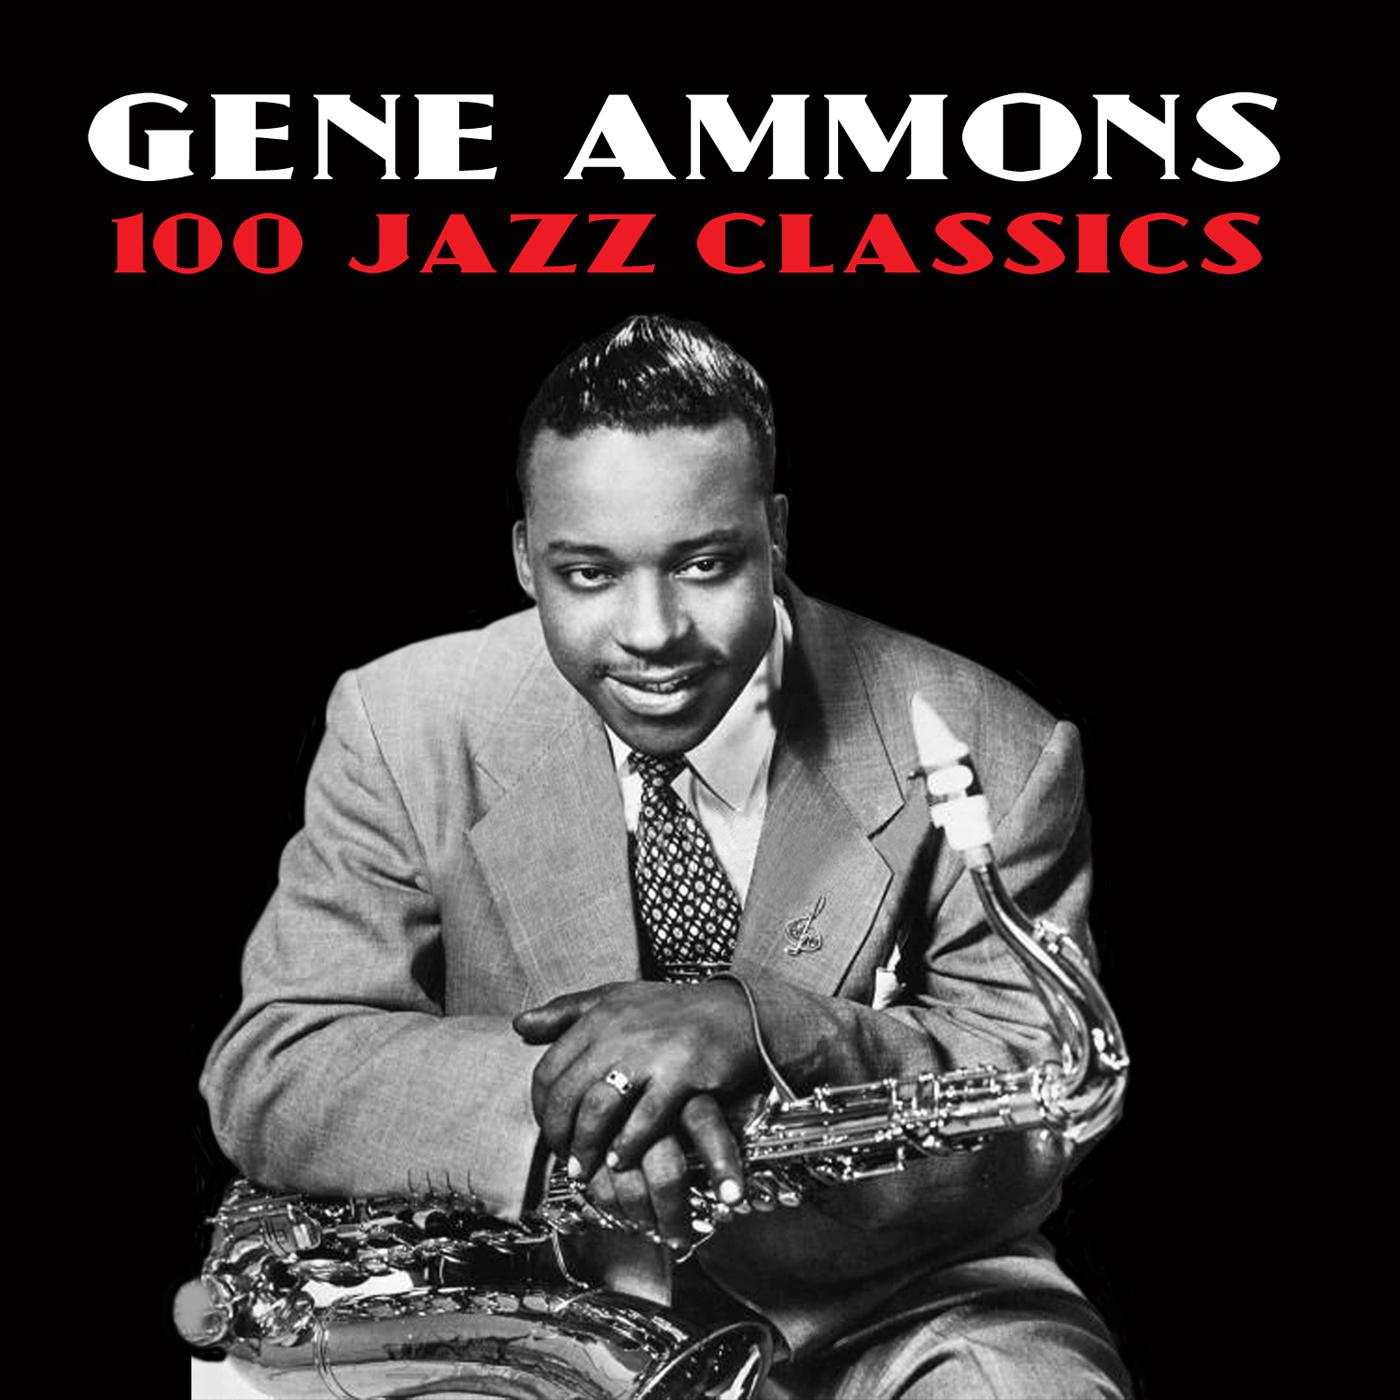 100 Jazz Classics